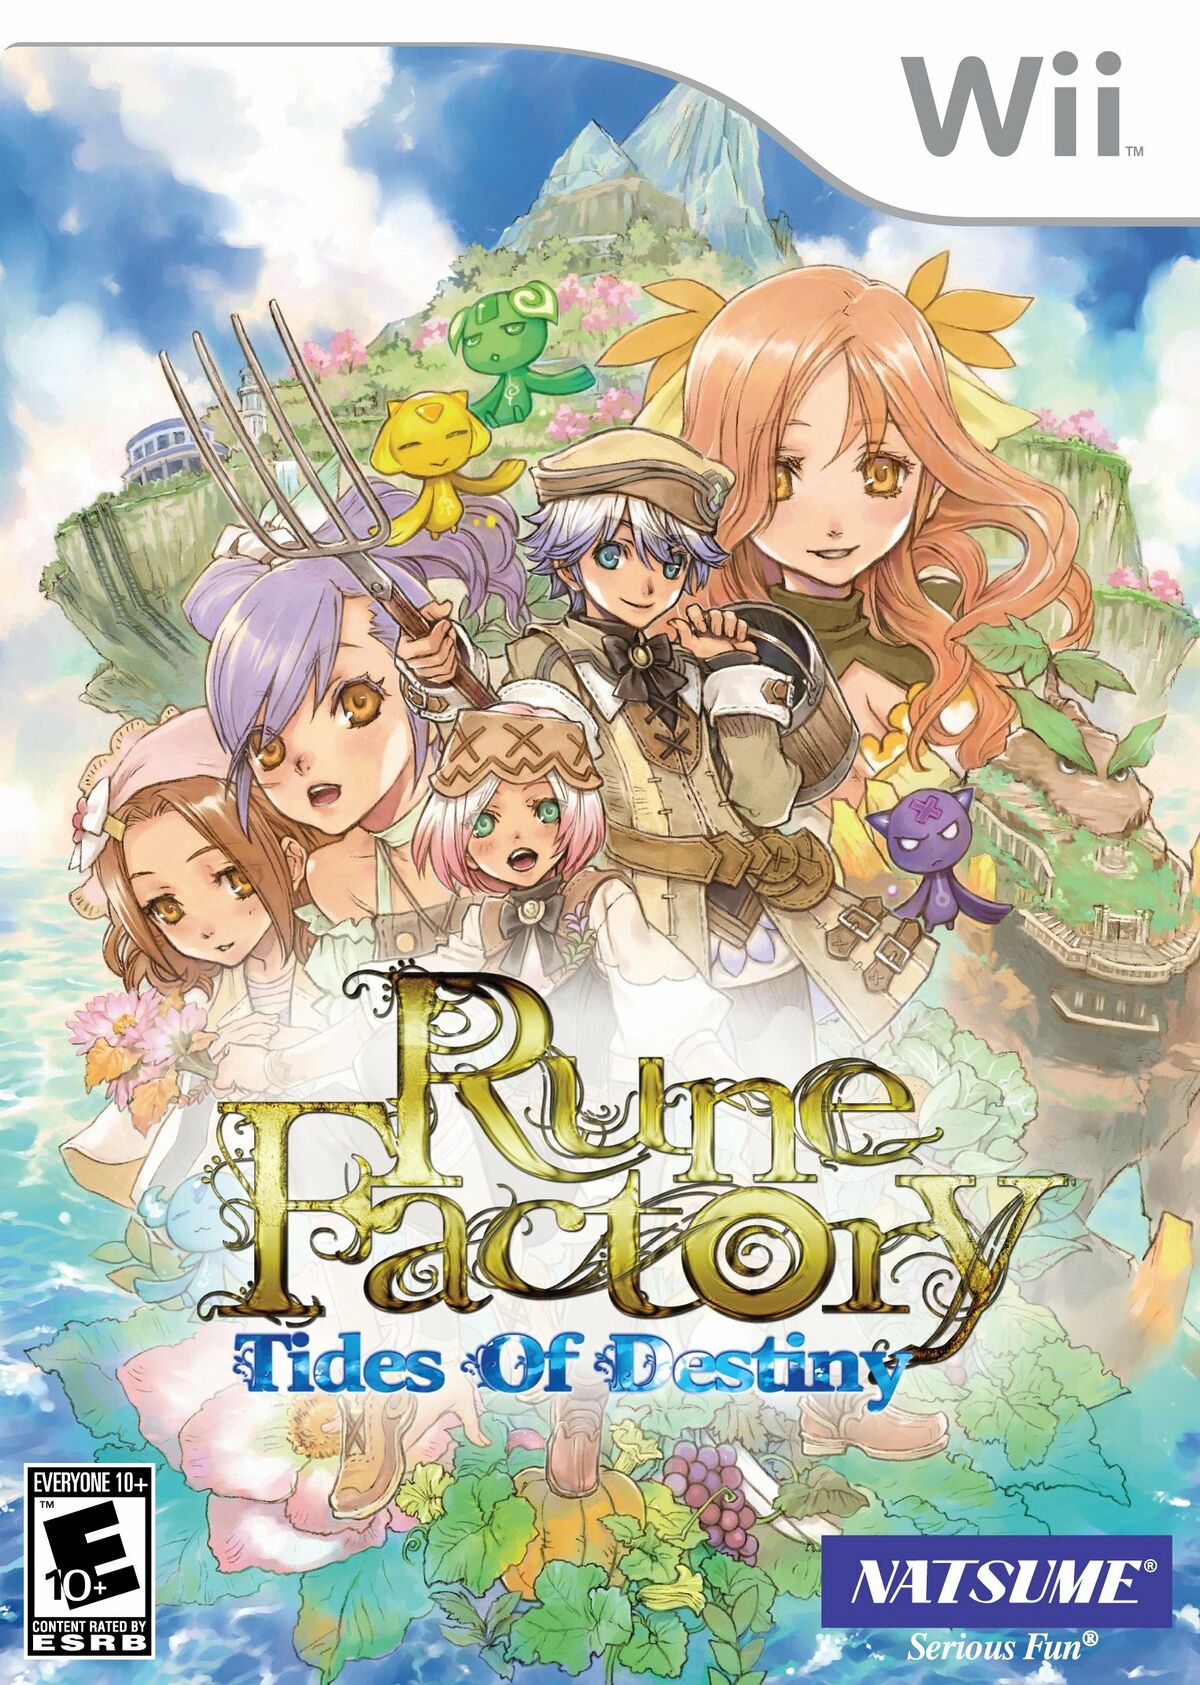 Rune Factory Frontier - Wikipedia